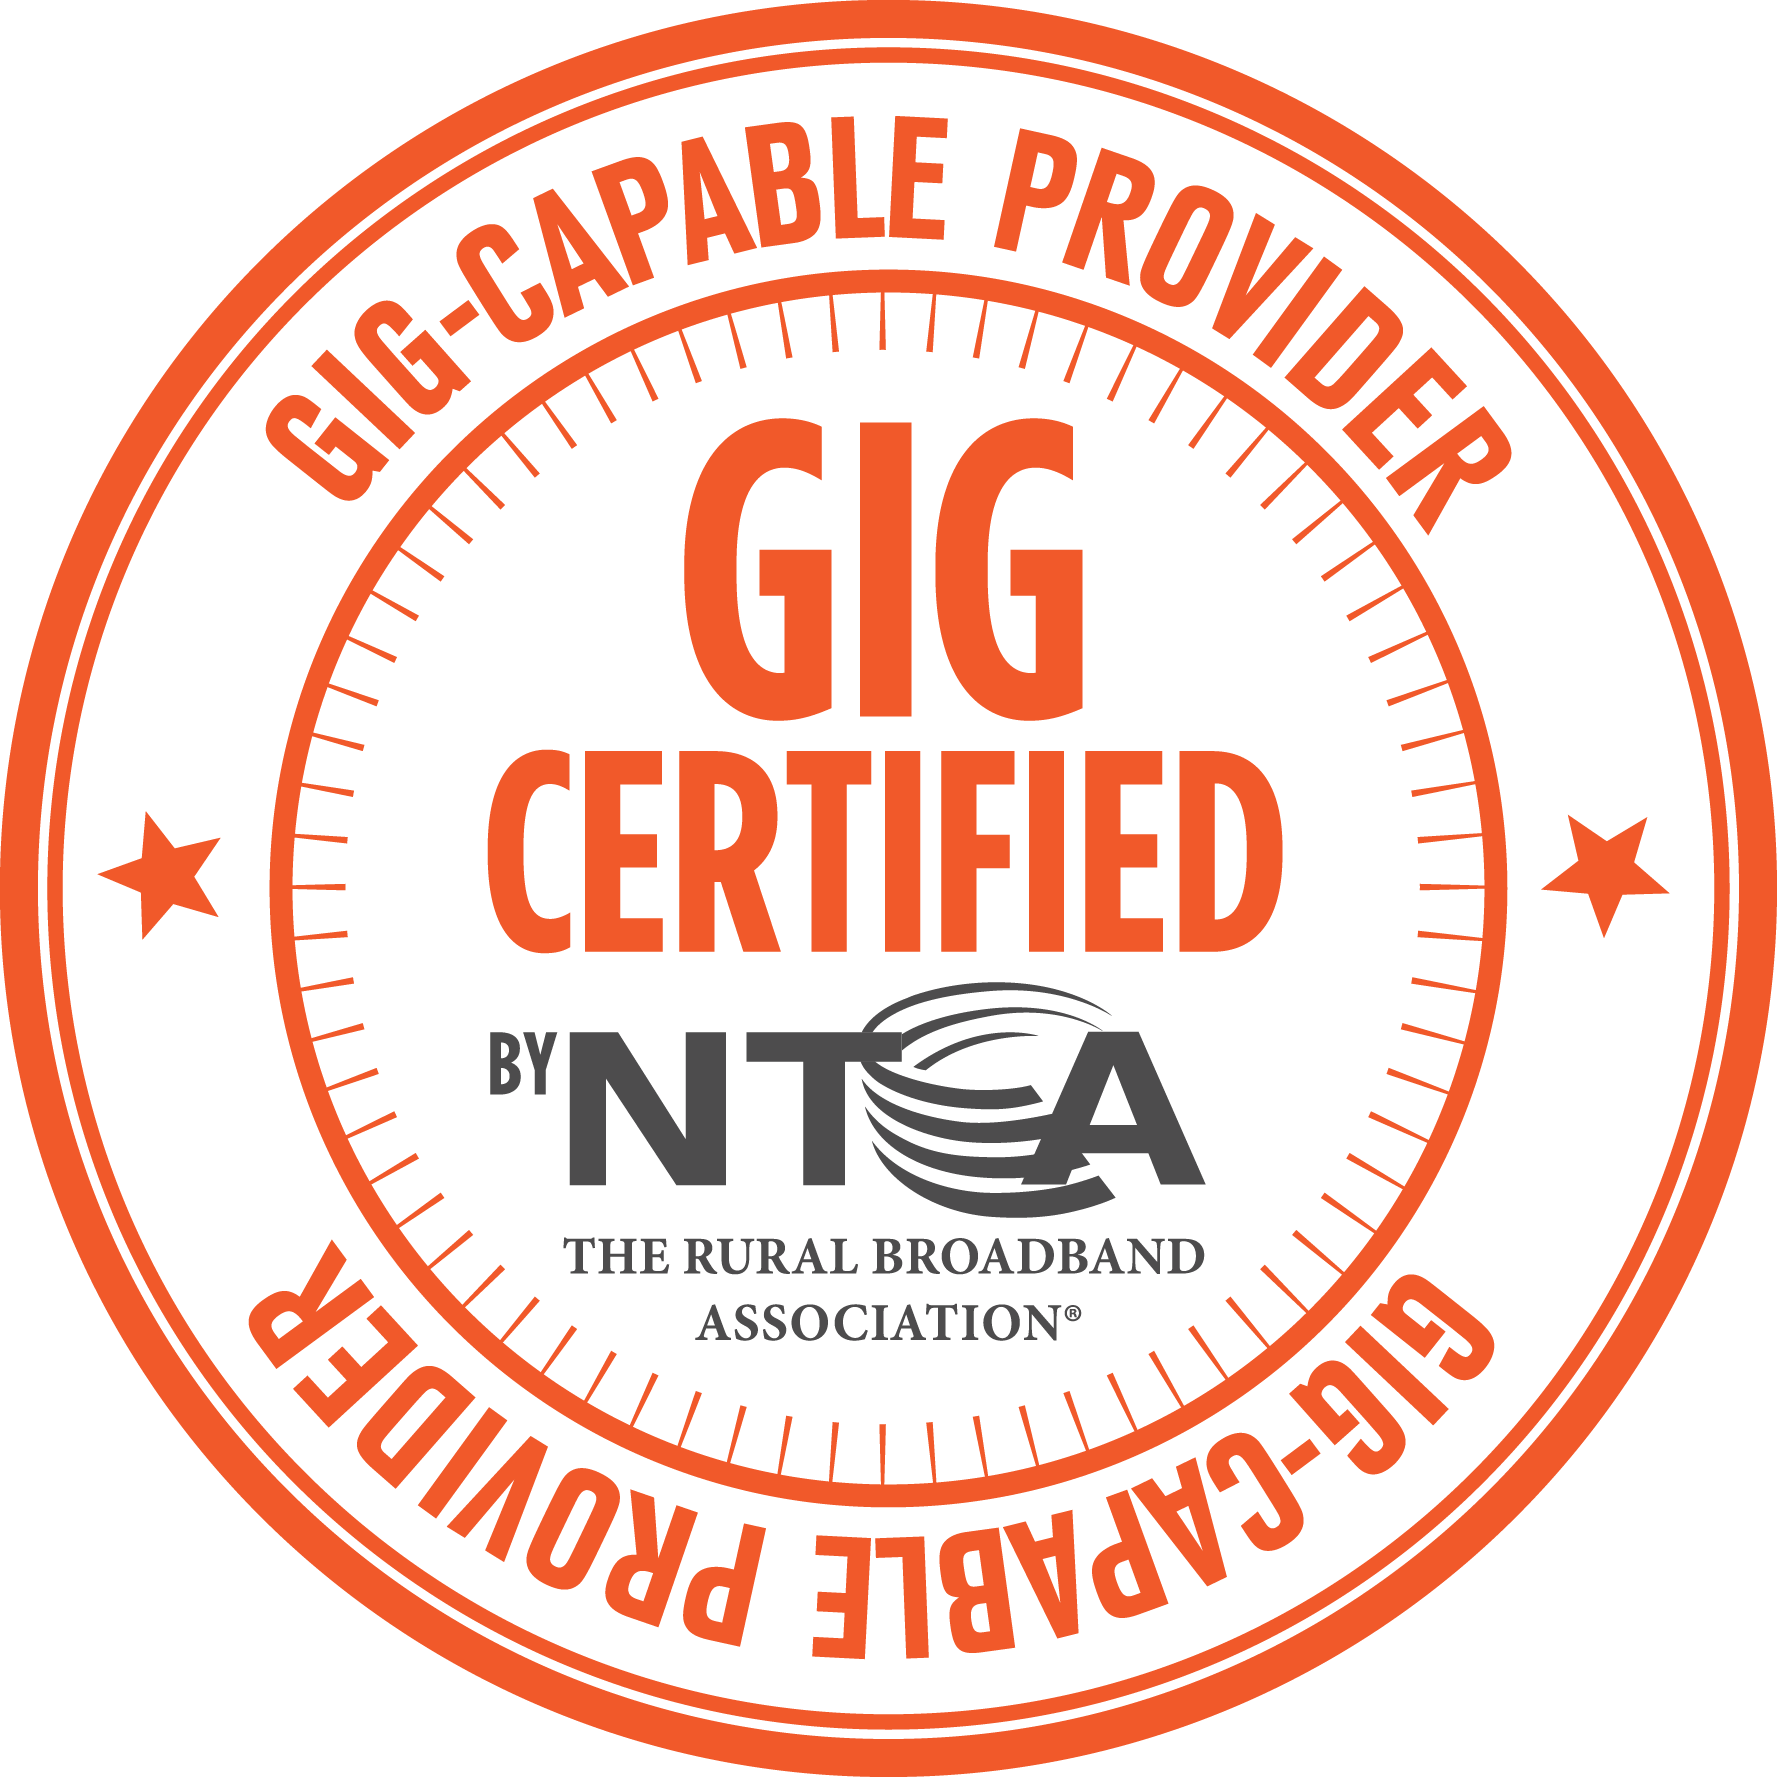 Blanca-Networks-Gig-Certified-Network-1-Gig-Speeds